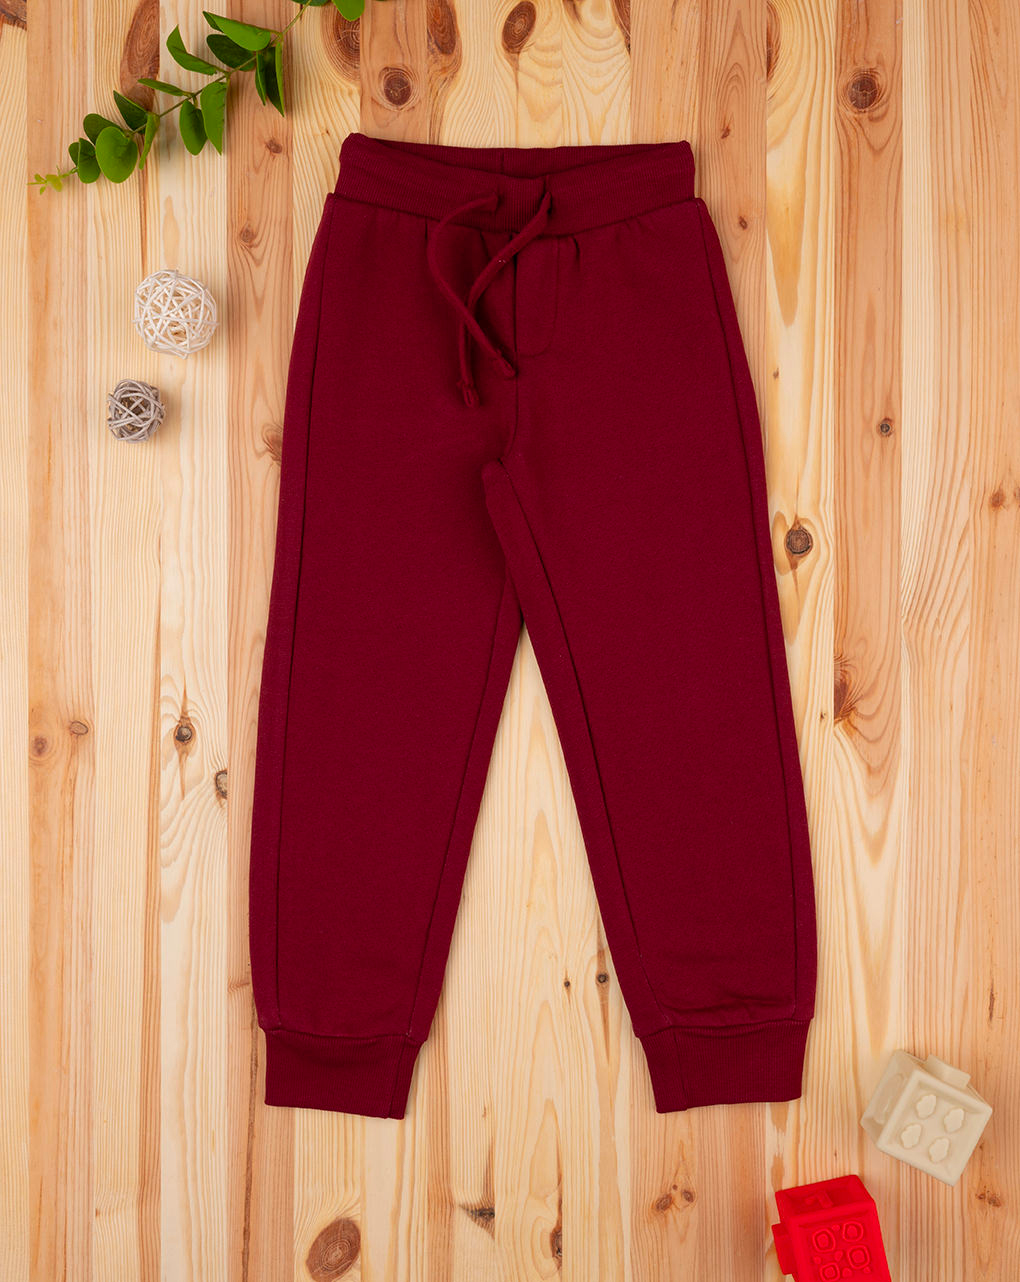 Pantalone rosso in felpa bambino - Prénatal